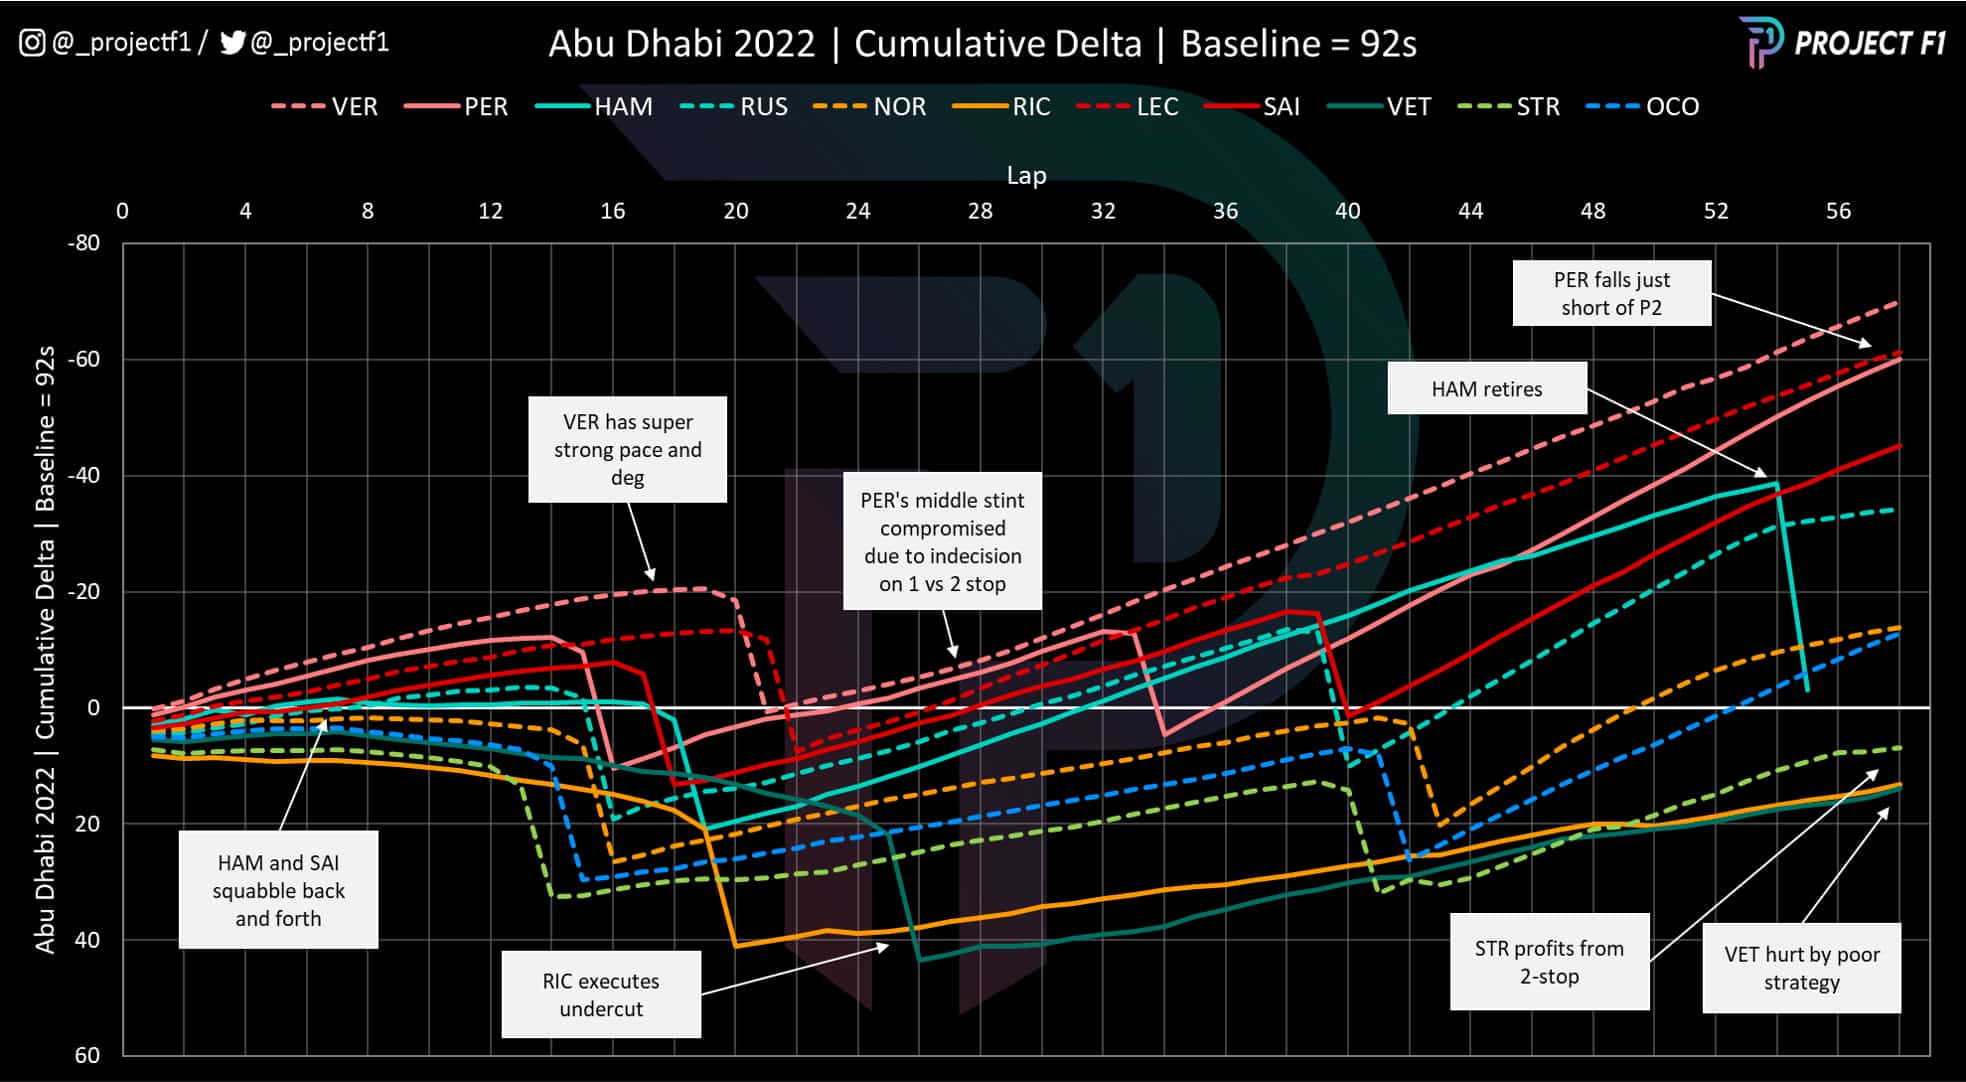 22 Abu Dhabi GP cumulative delta